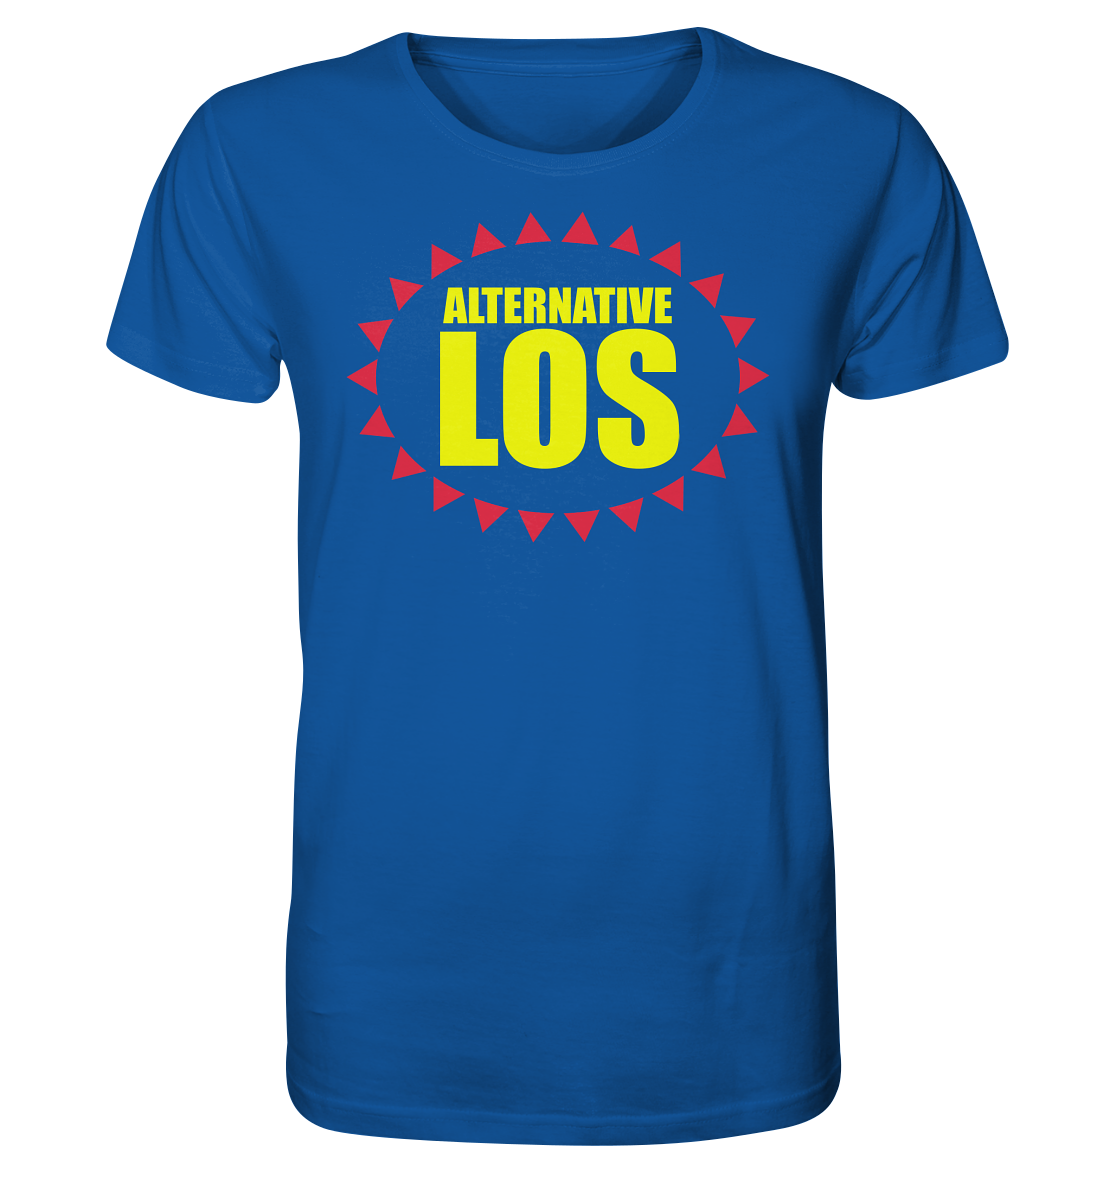 ALTERNATIVE LOS LOGO - Organic Shirt